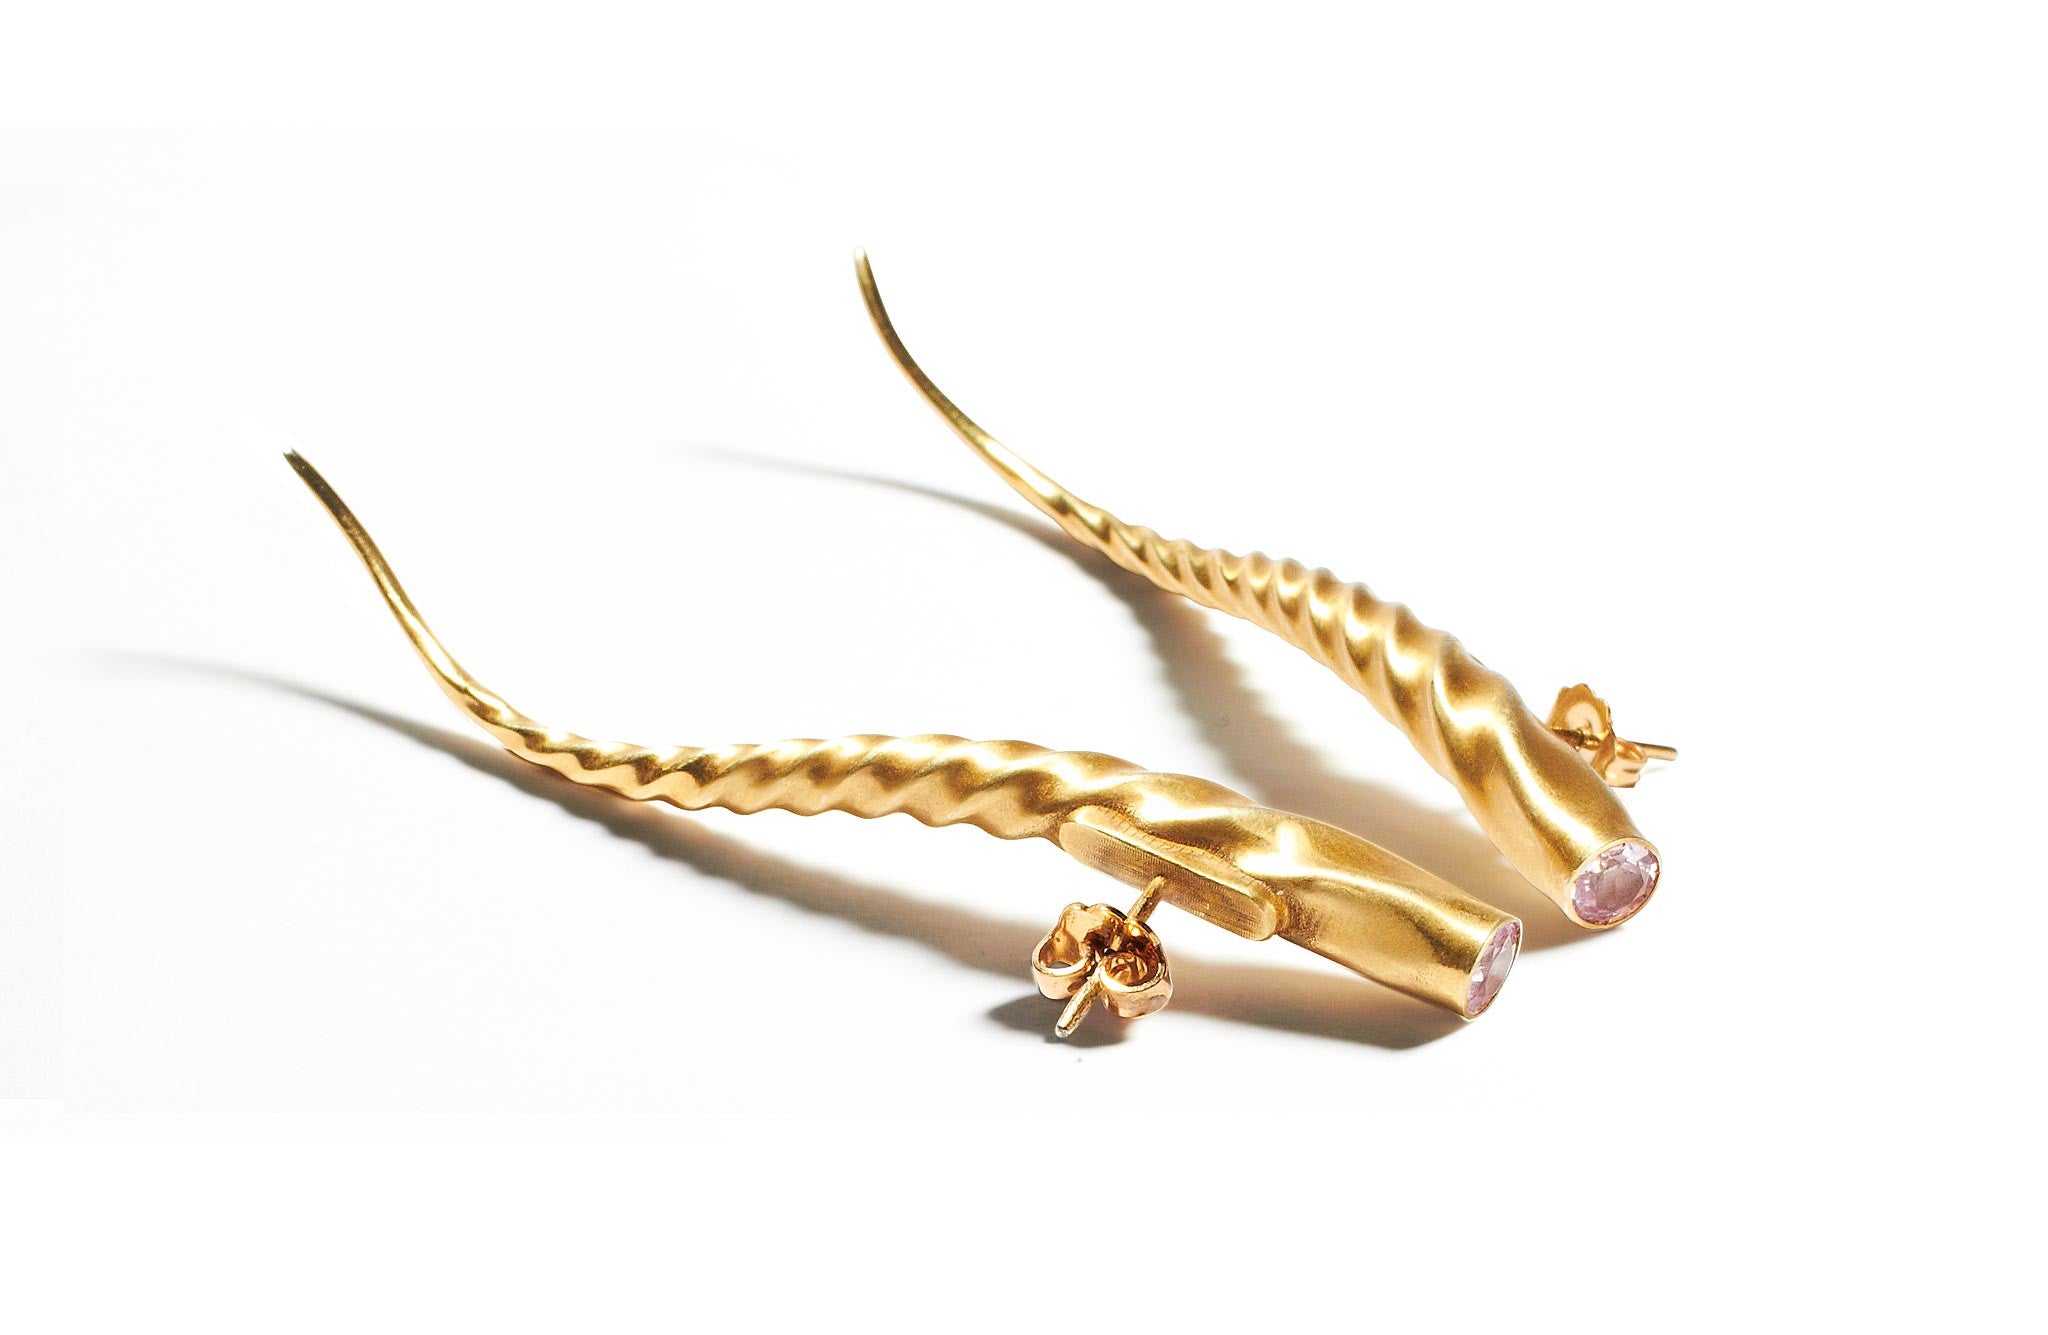 22k Yellow Gold Earrings - Earrings, HD Png Download - 1000x1000(#3330170)  - PngFind